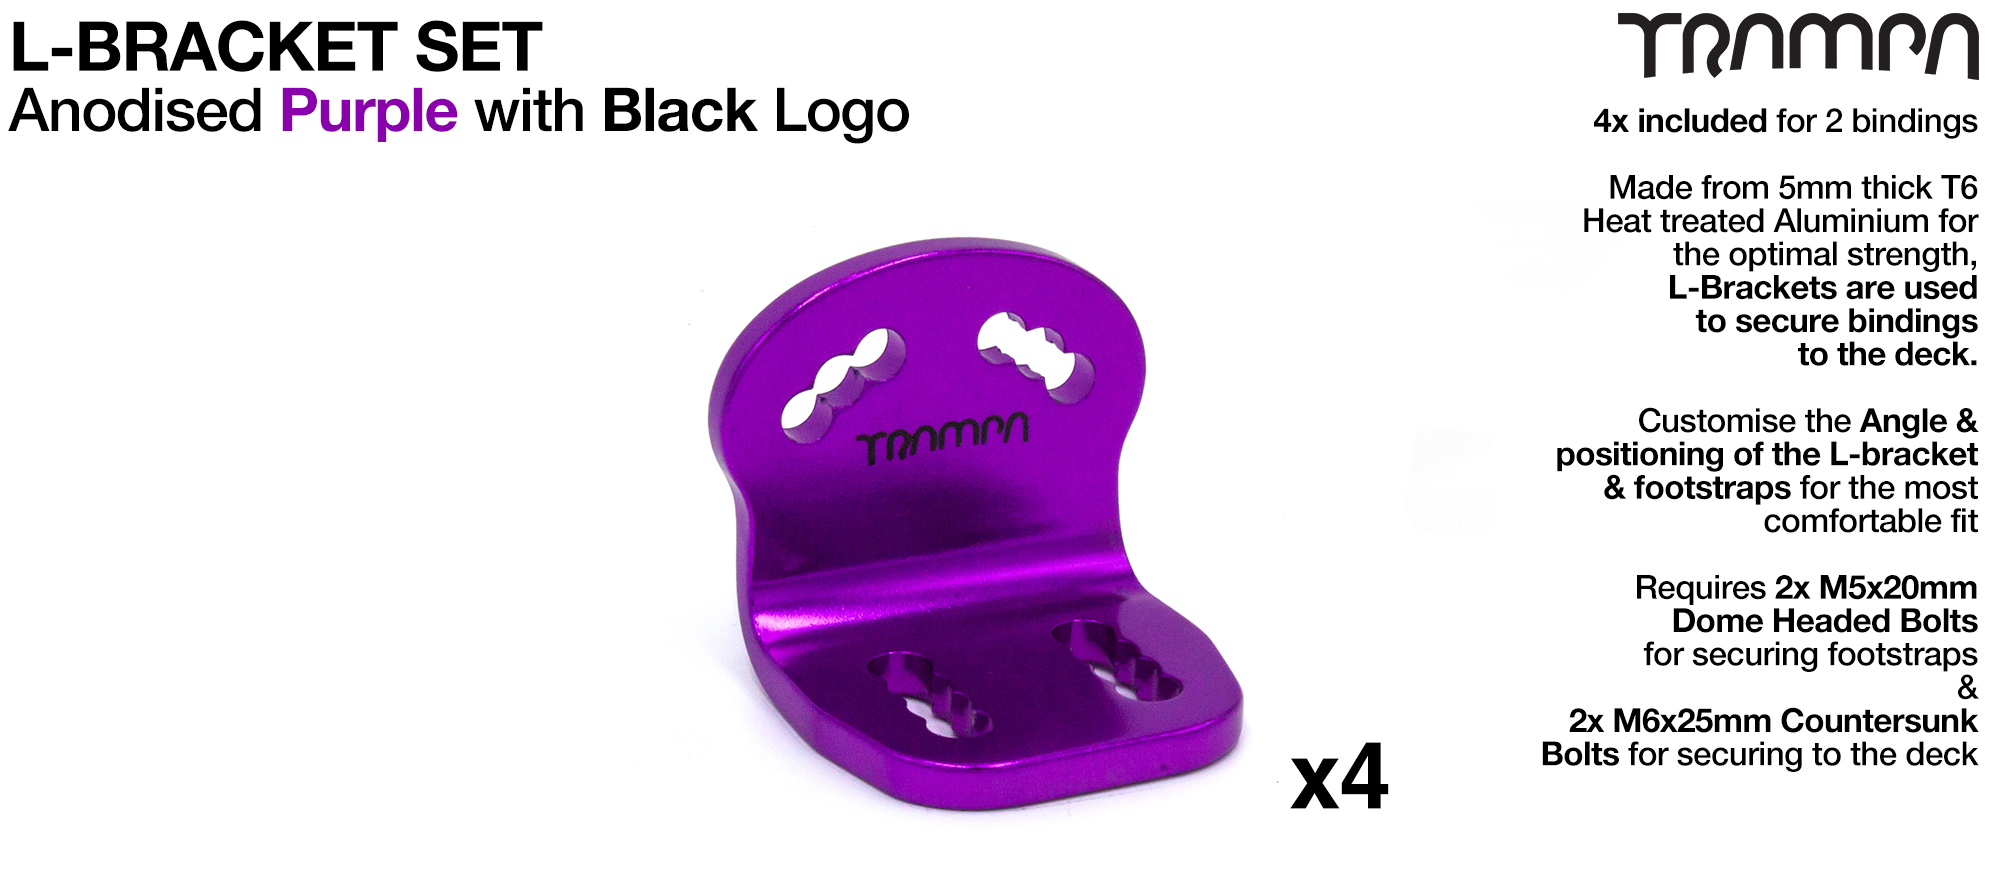 L Bracket - Anodised PURPLE with BLACK logo x4